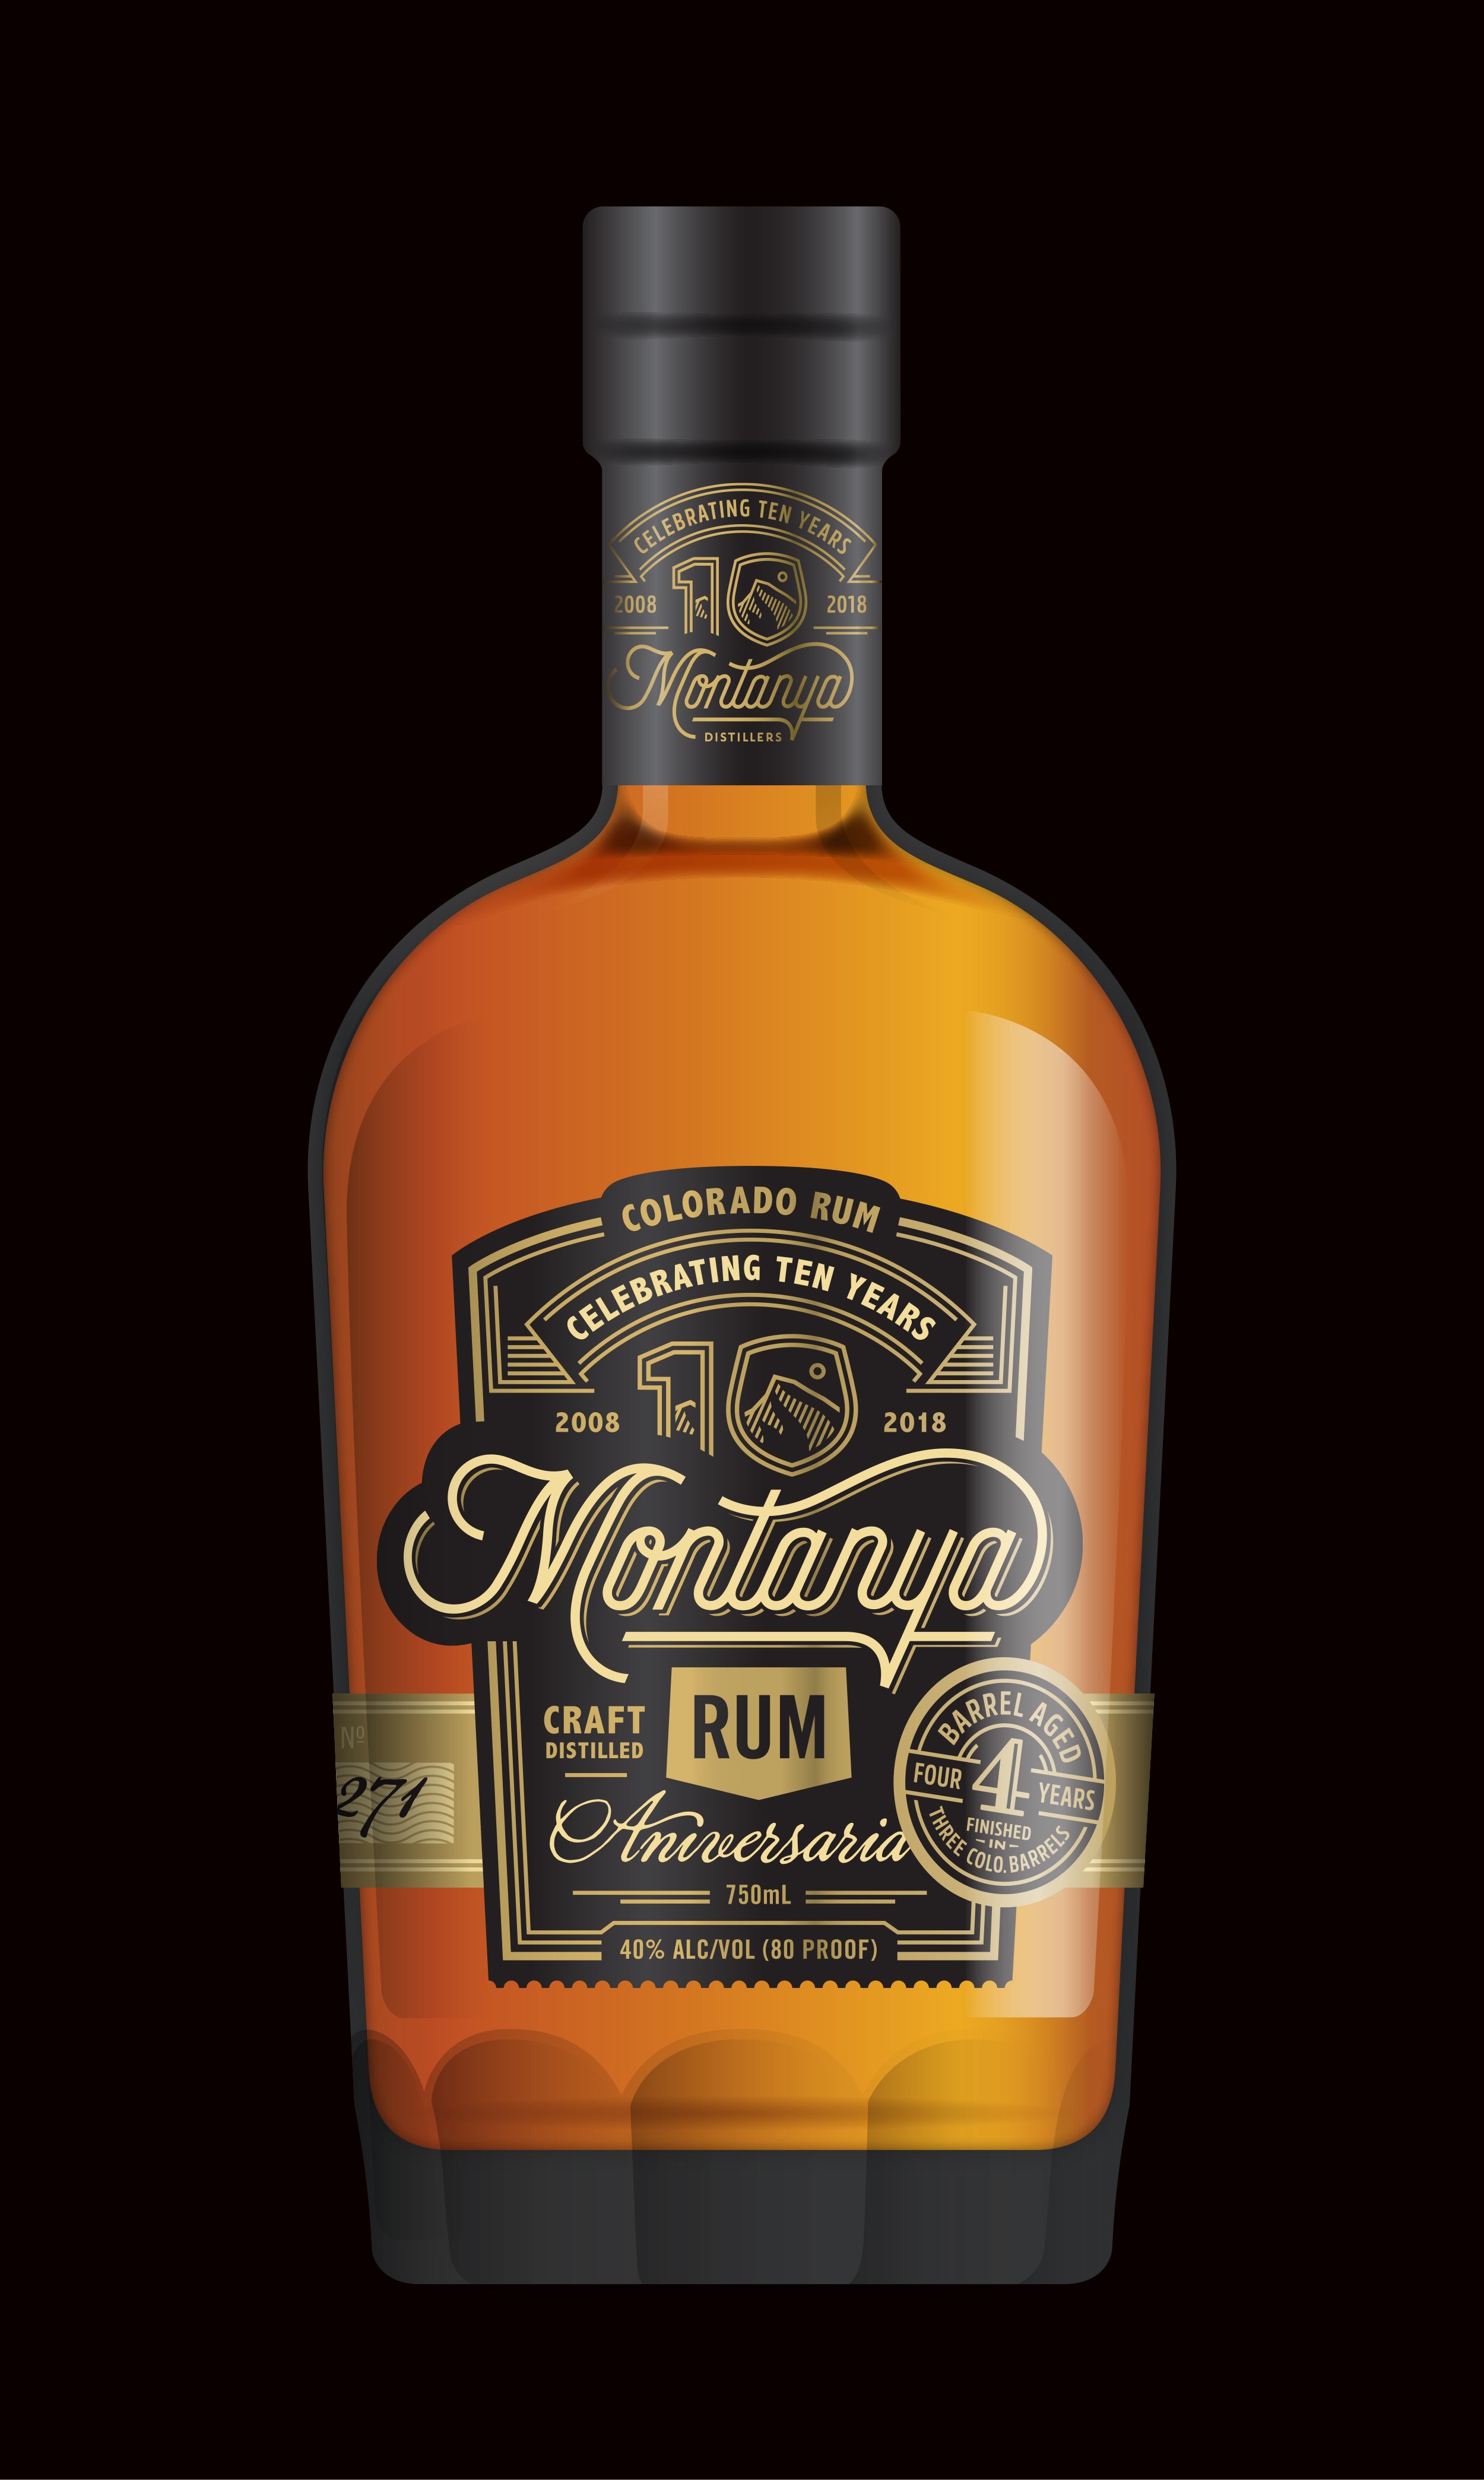 Montanya Aniversaria Rum Label by Sunday Lounge